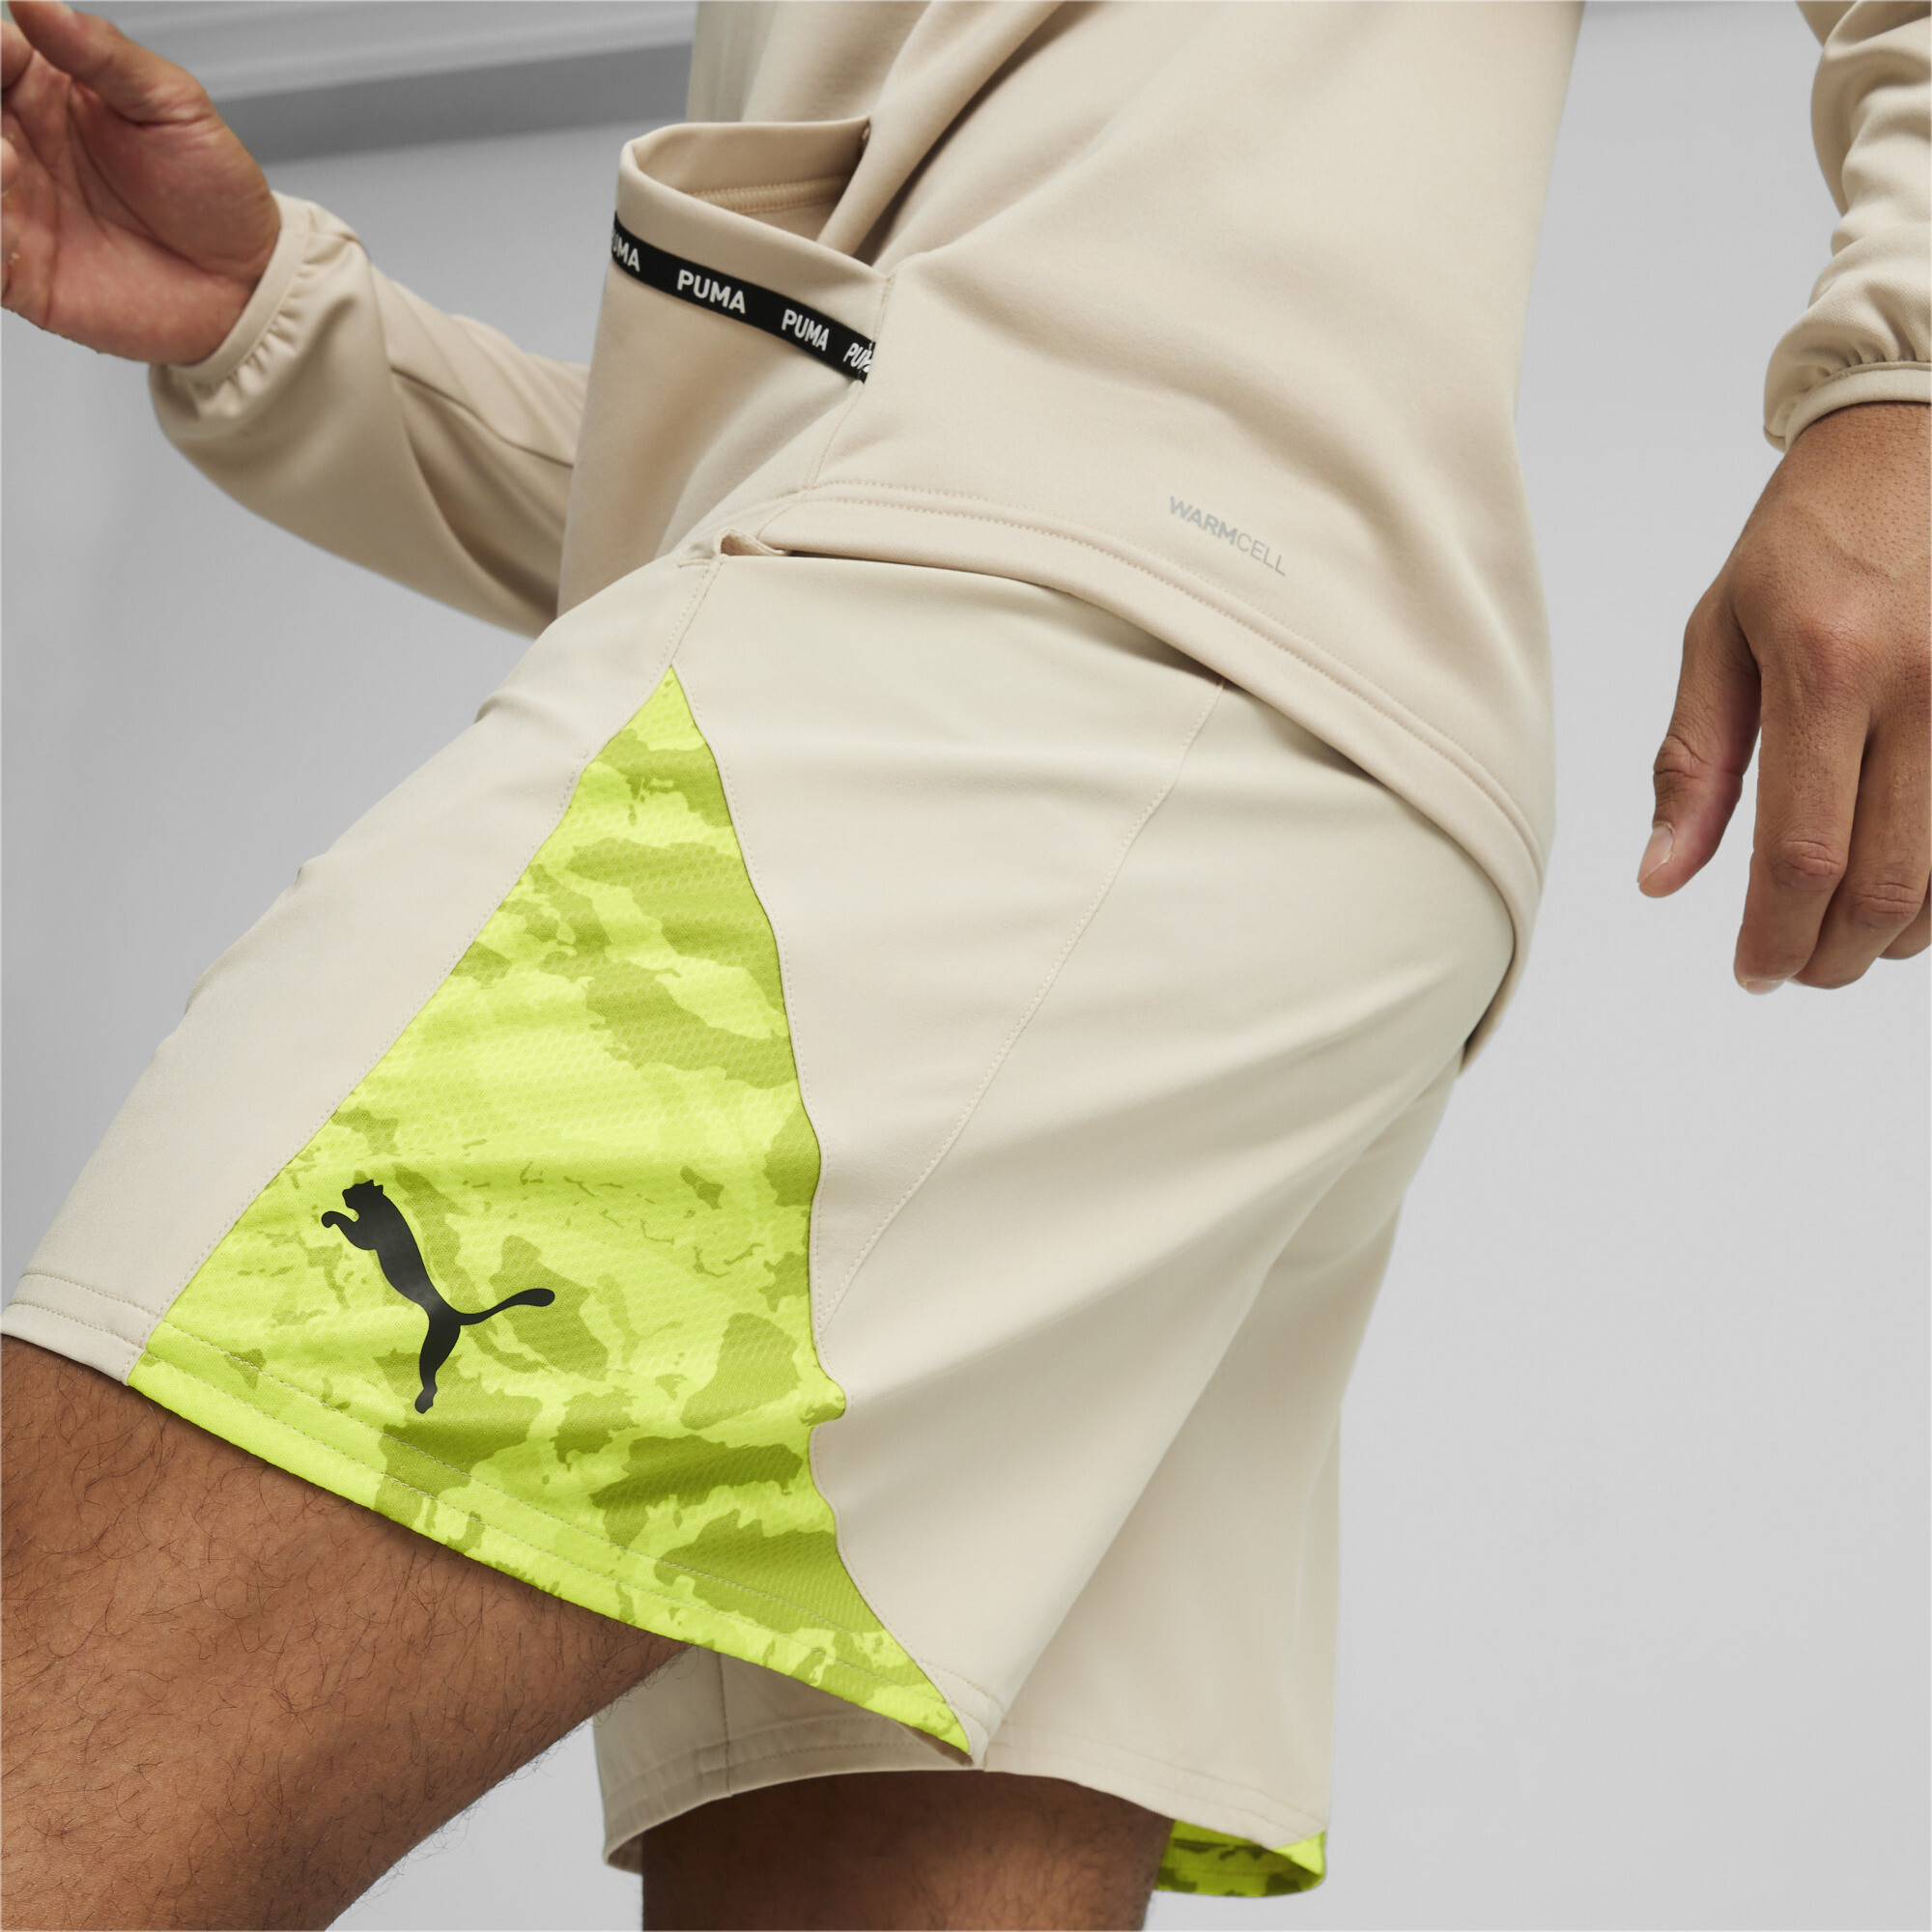 Men's PUMA FIT 7 Shorts In Beige, Size XS